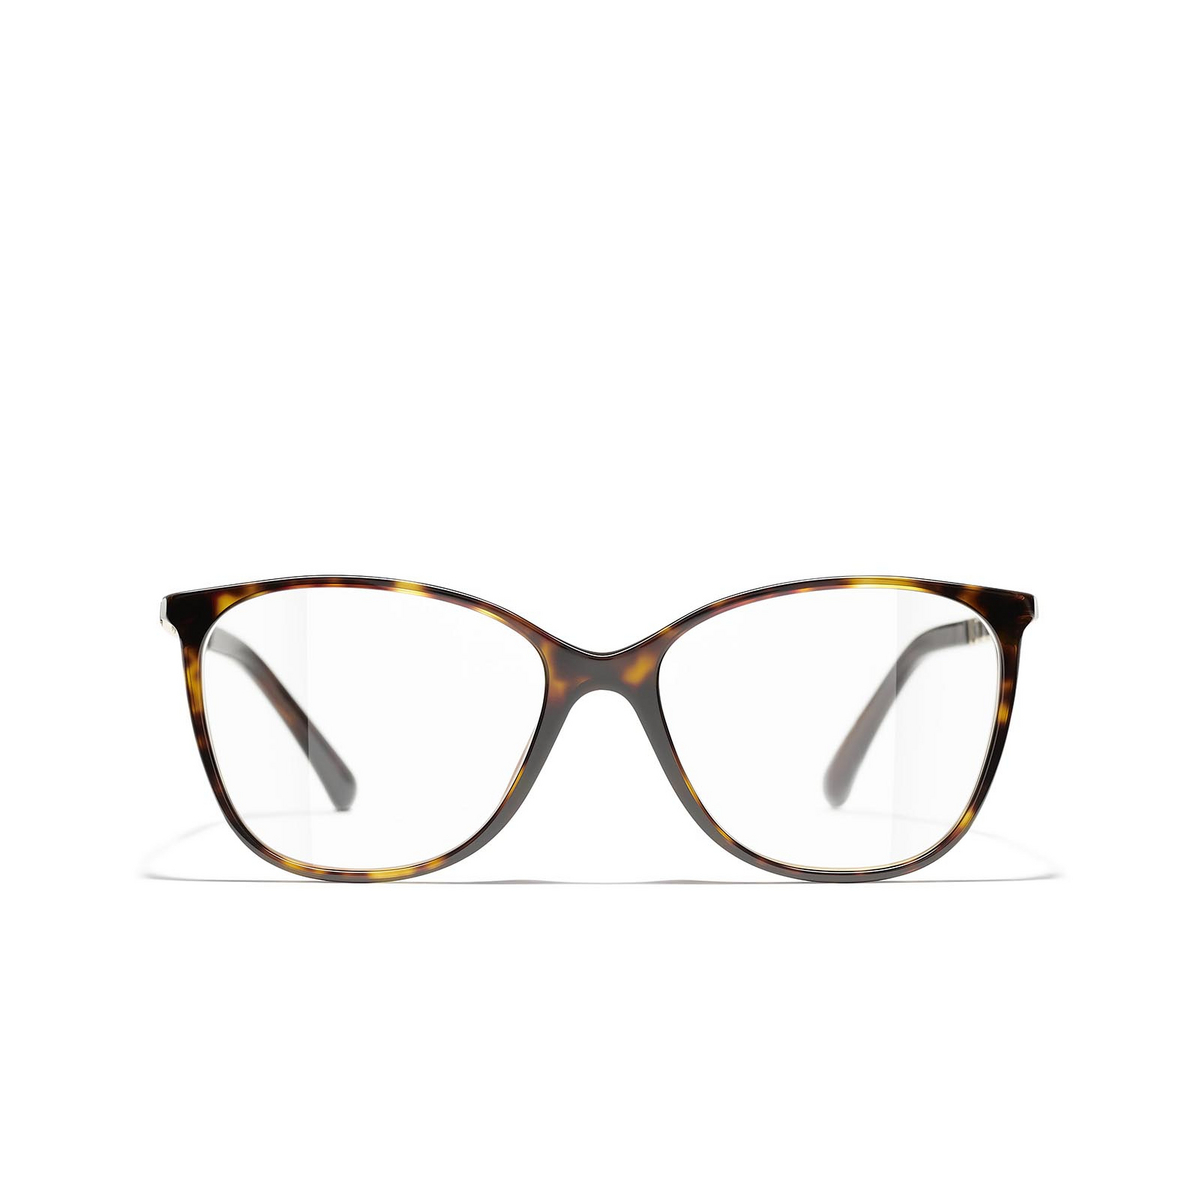 CHANEL square Eyeglasses C714 Dark Tortoise - front view